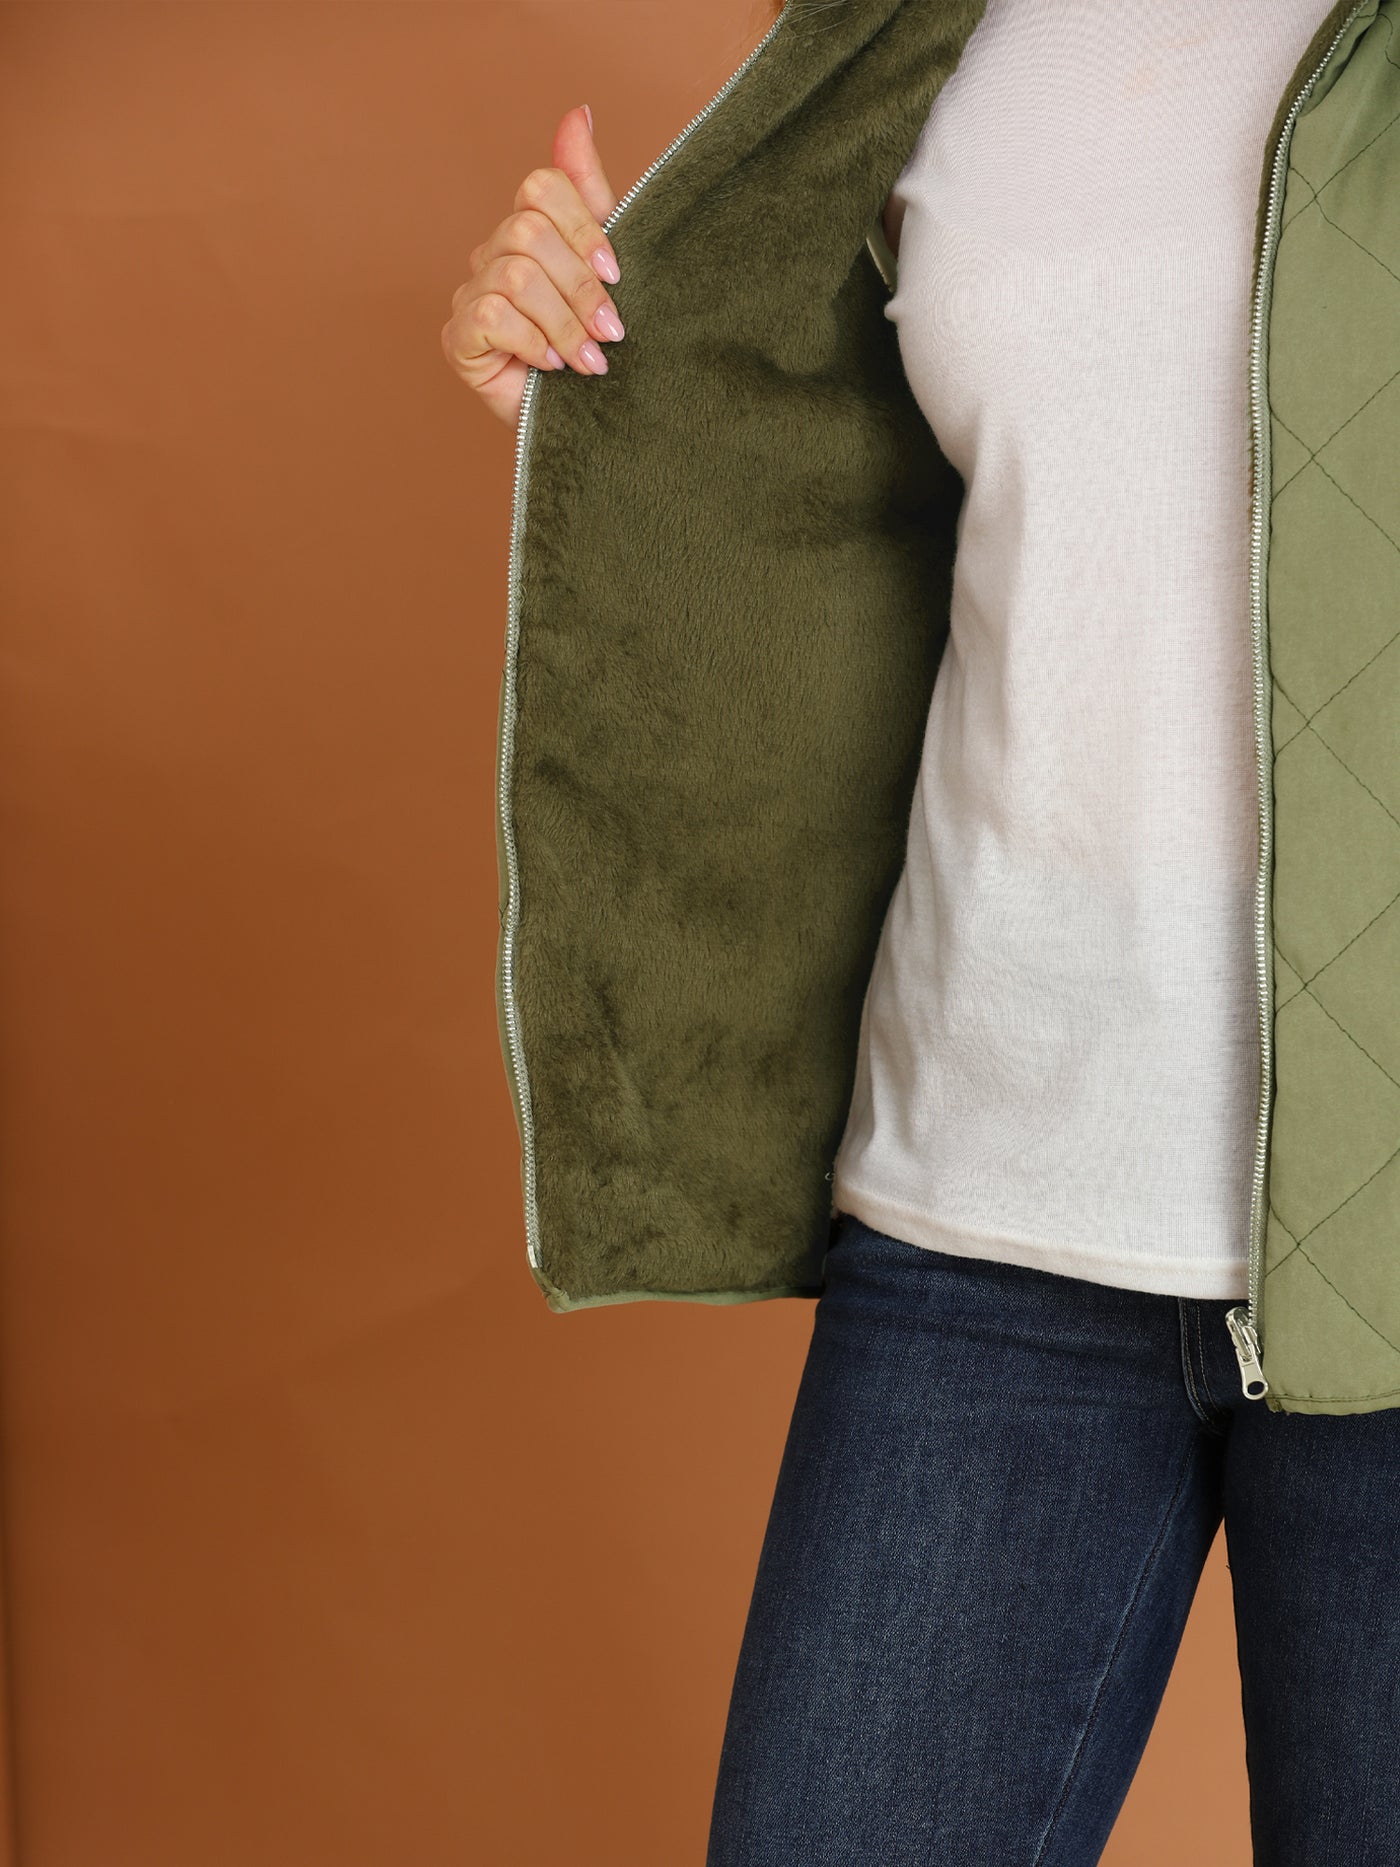 Allegra K Stand Collar Zip Up Front Quilted Fleece Vest with Pockets